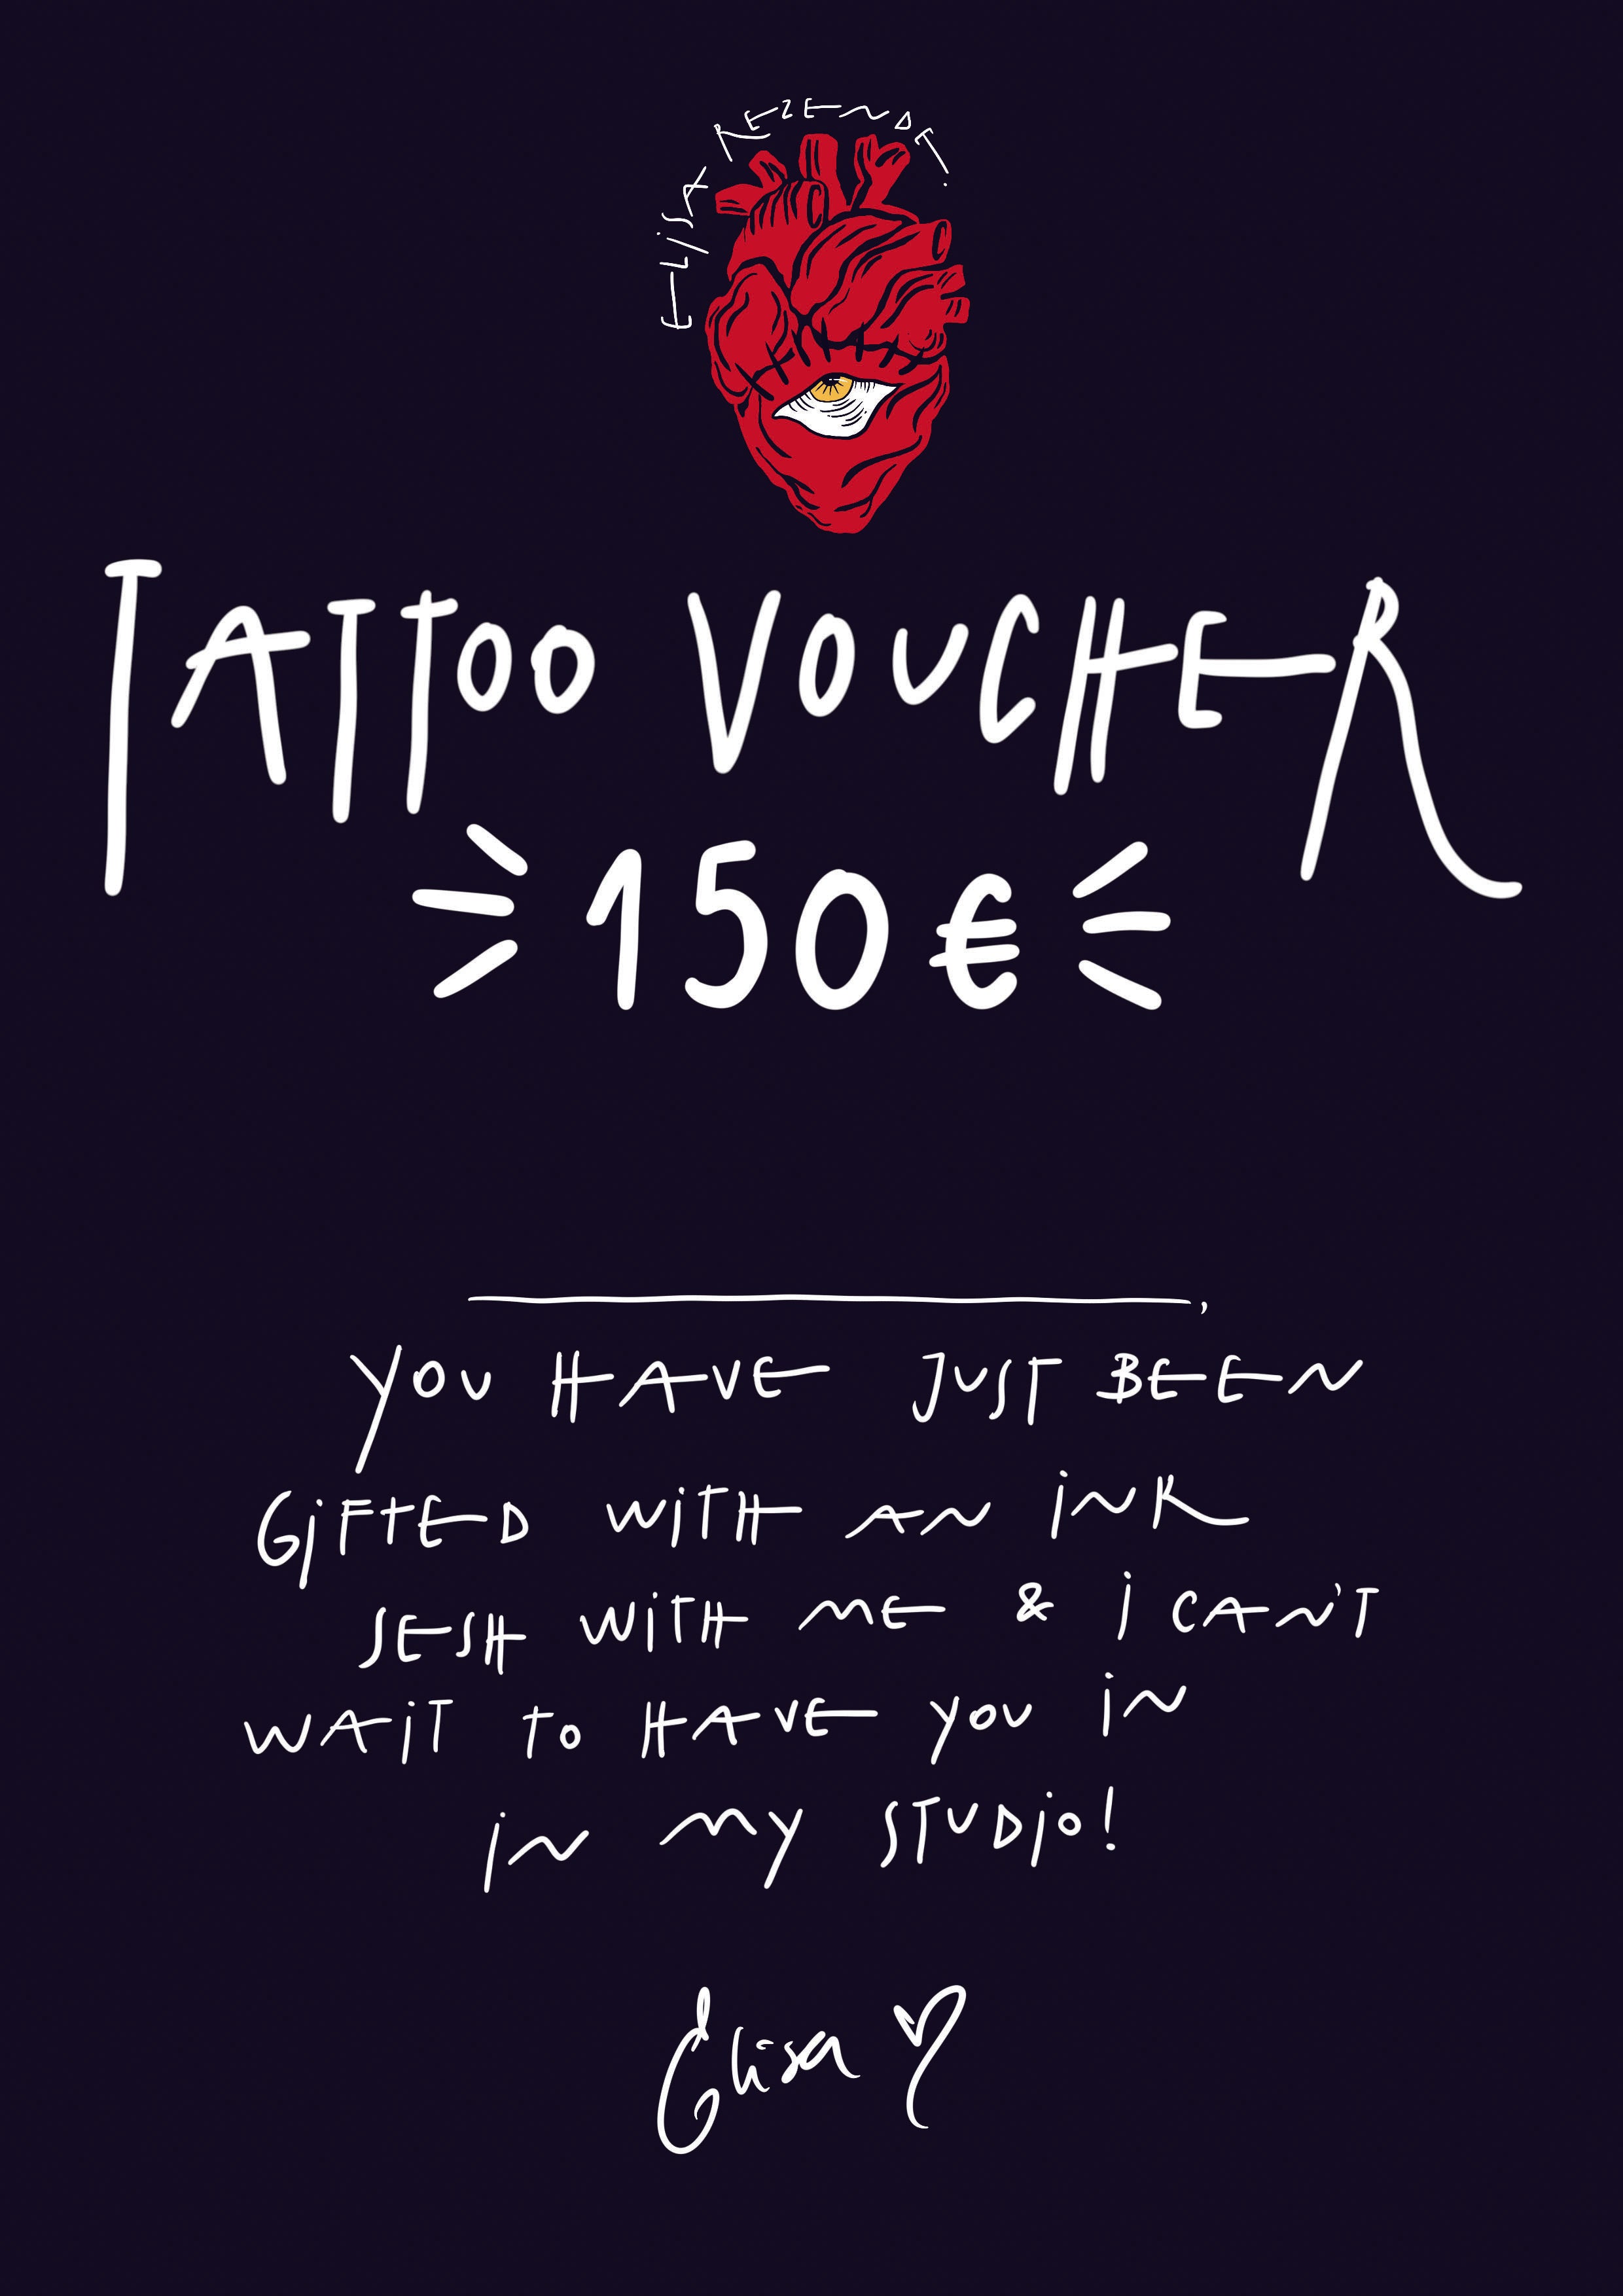 Tattoo Voucher